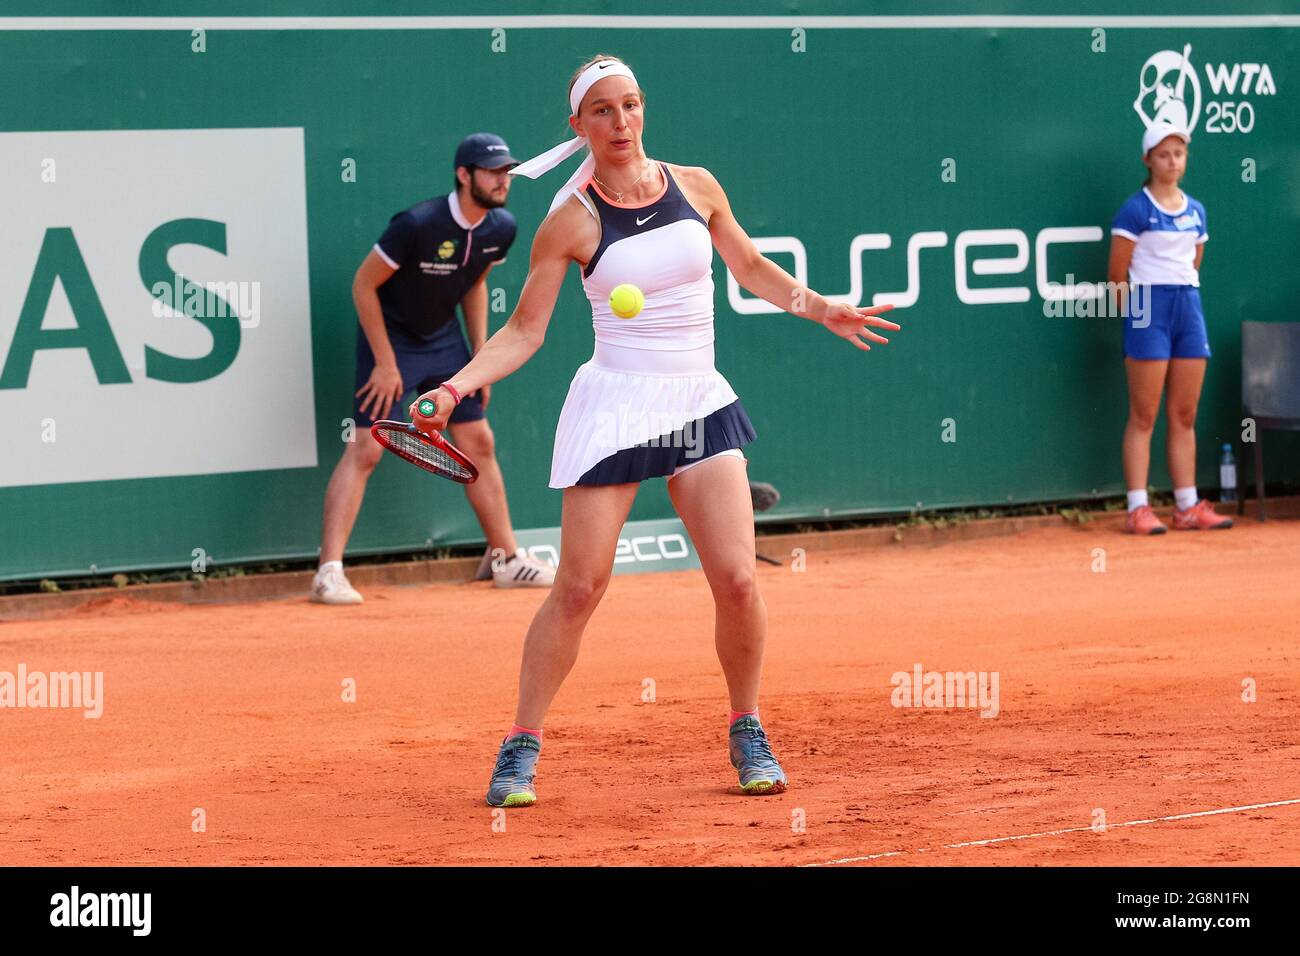 Tamara Korpatsch (GERMANY) plays against Weronika Falkowska (POLAND) during the BNP Paribas Poland Open Tournament (WTA 250 category) in Gdynia